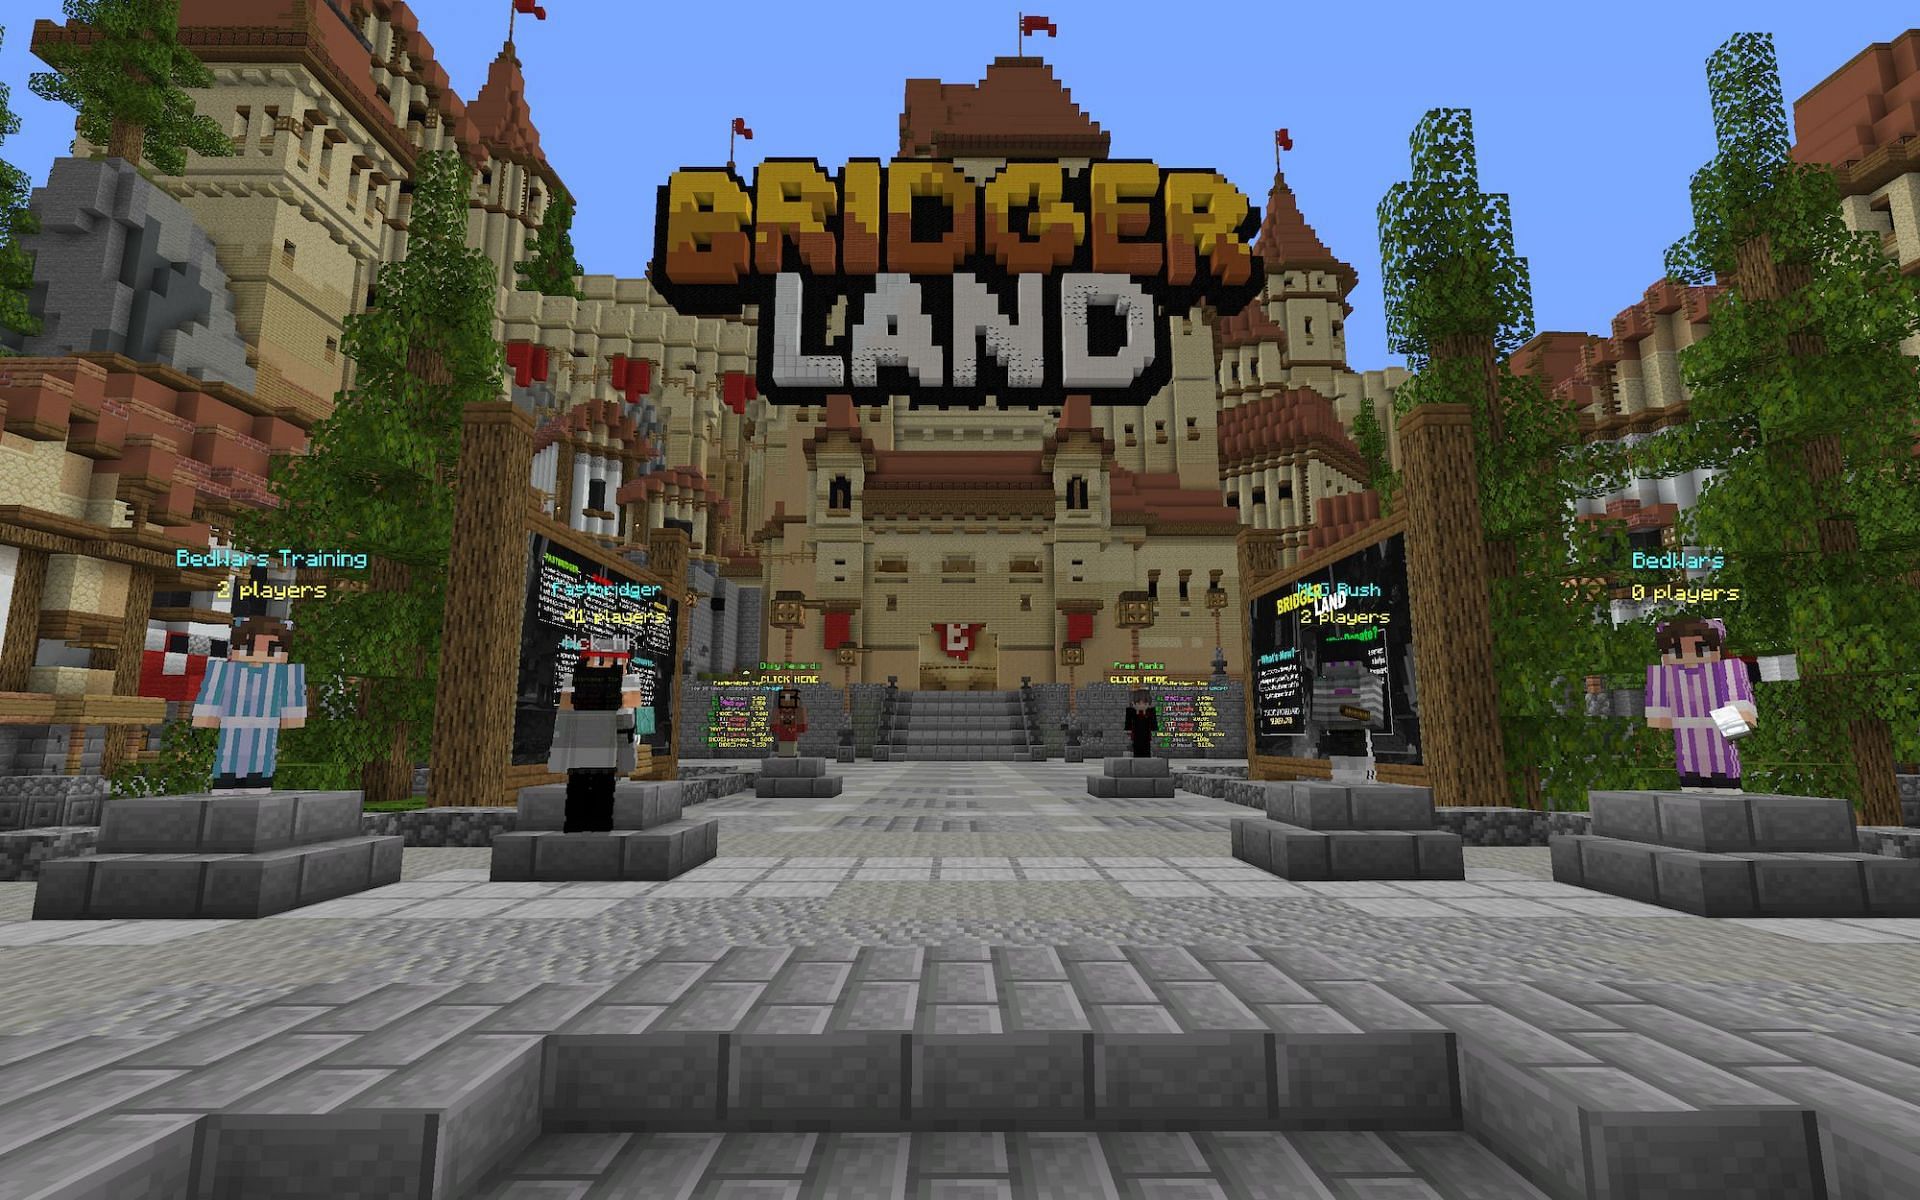 Bridger Land lobby (Image via Minecraft)